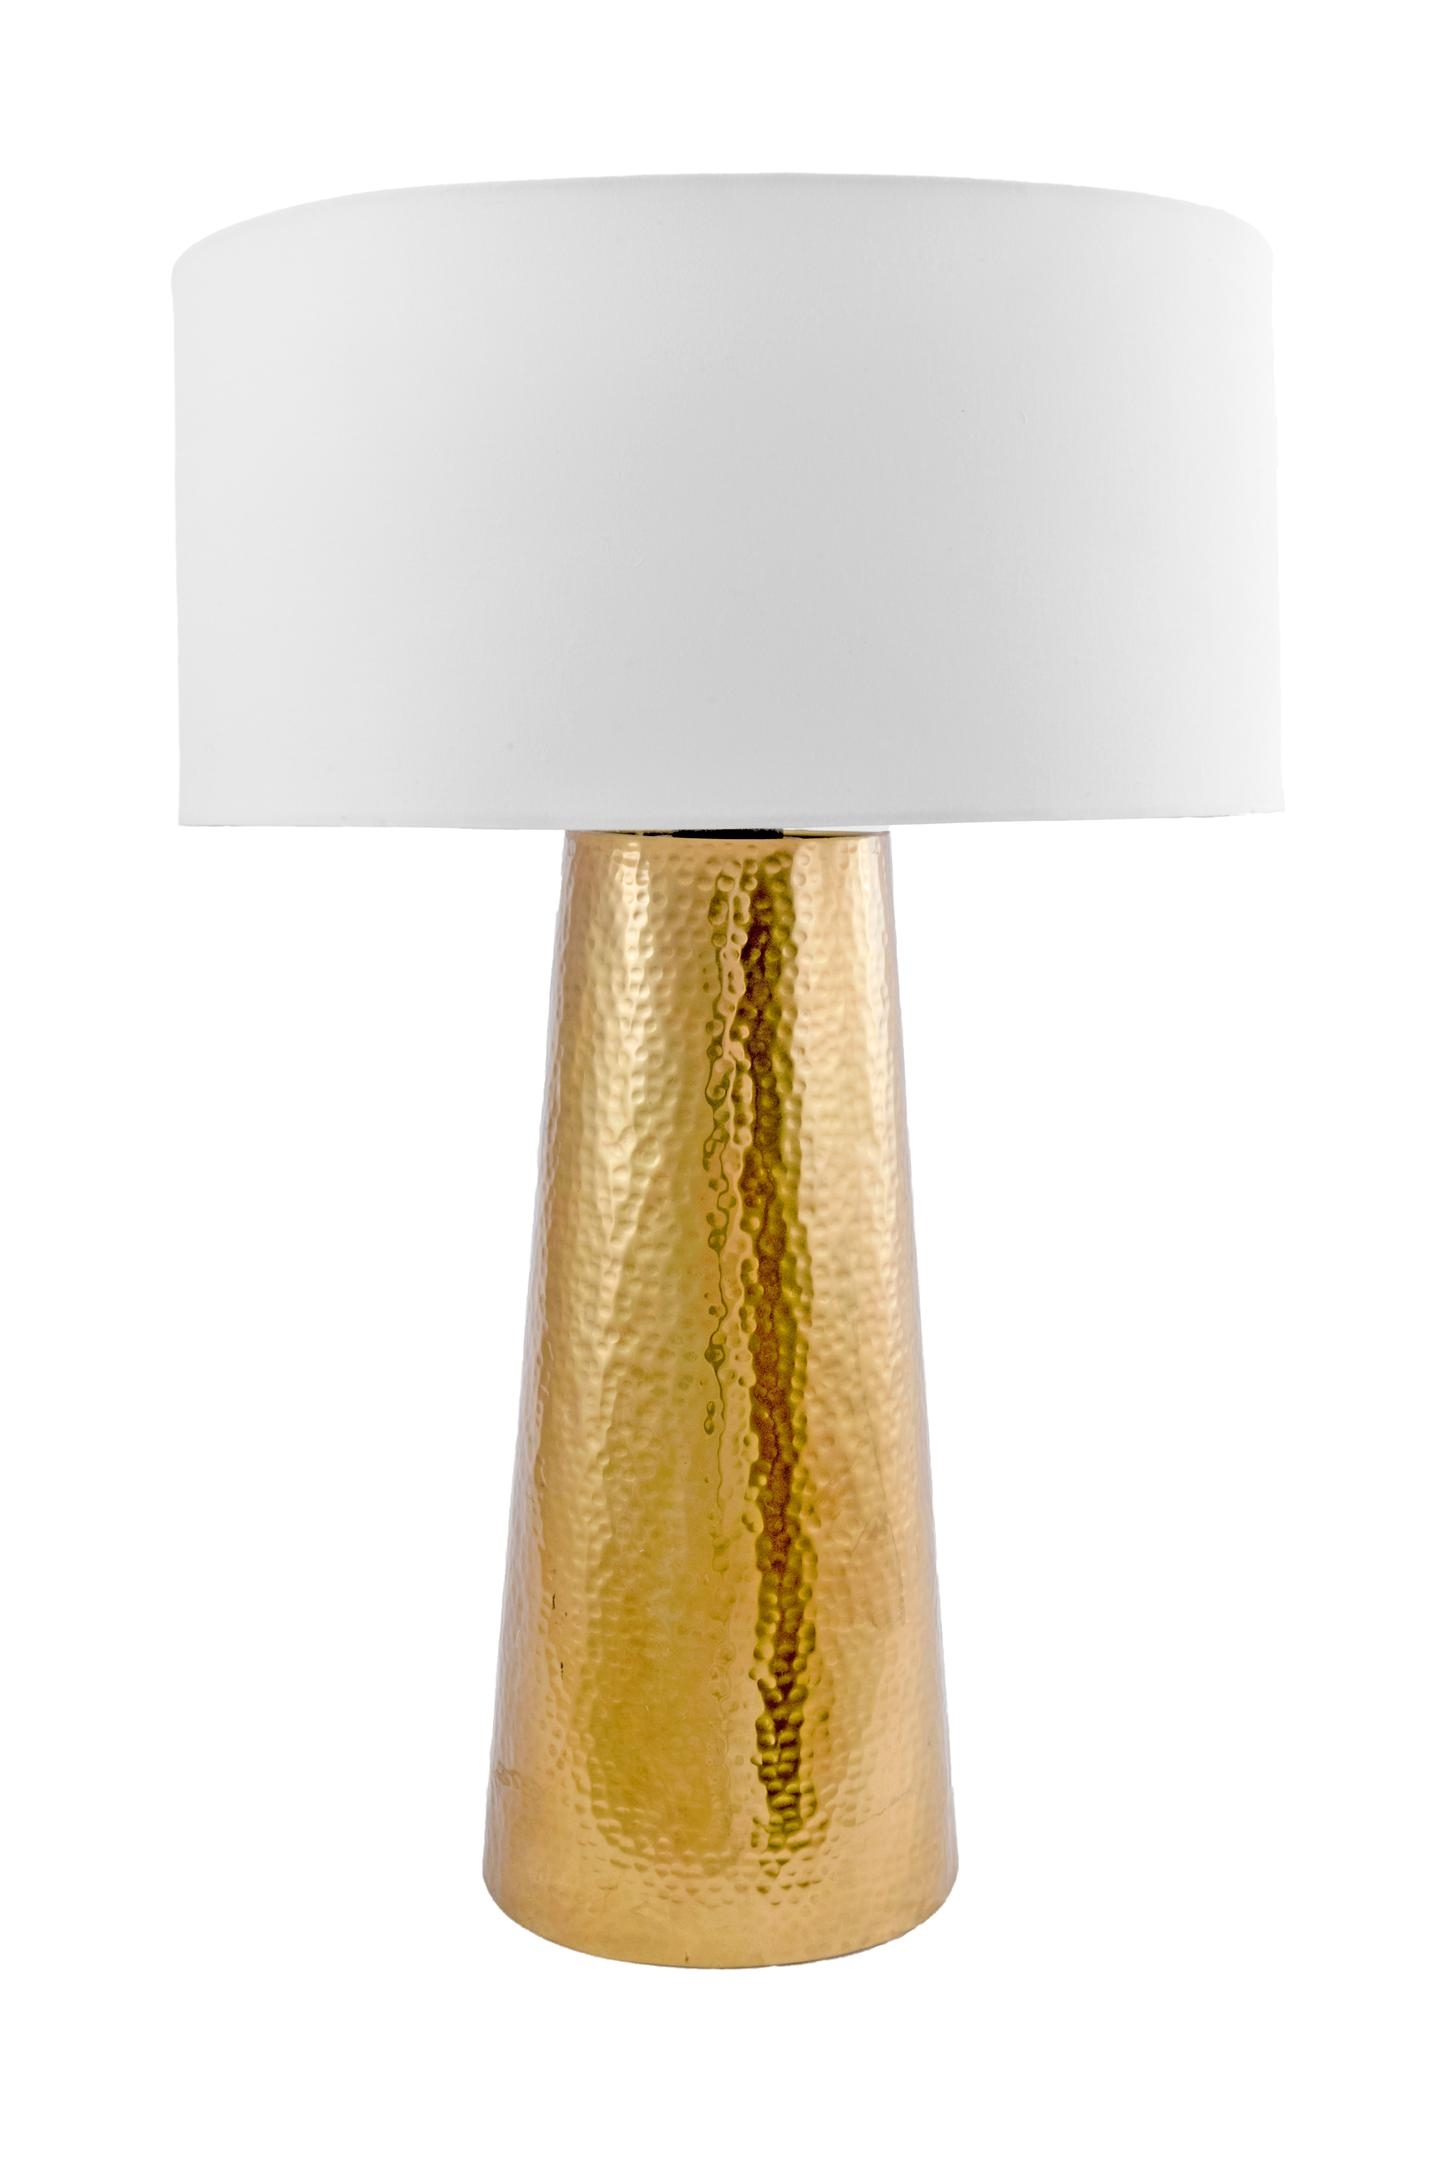 Olympia 21" Metal Table Lamp - Image 0